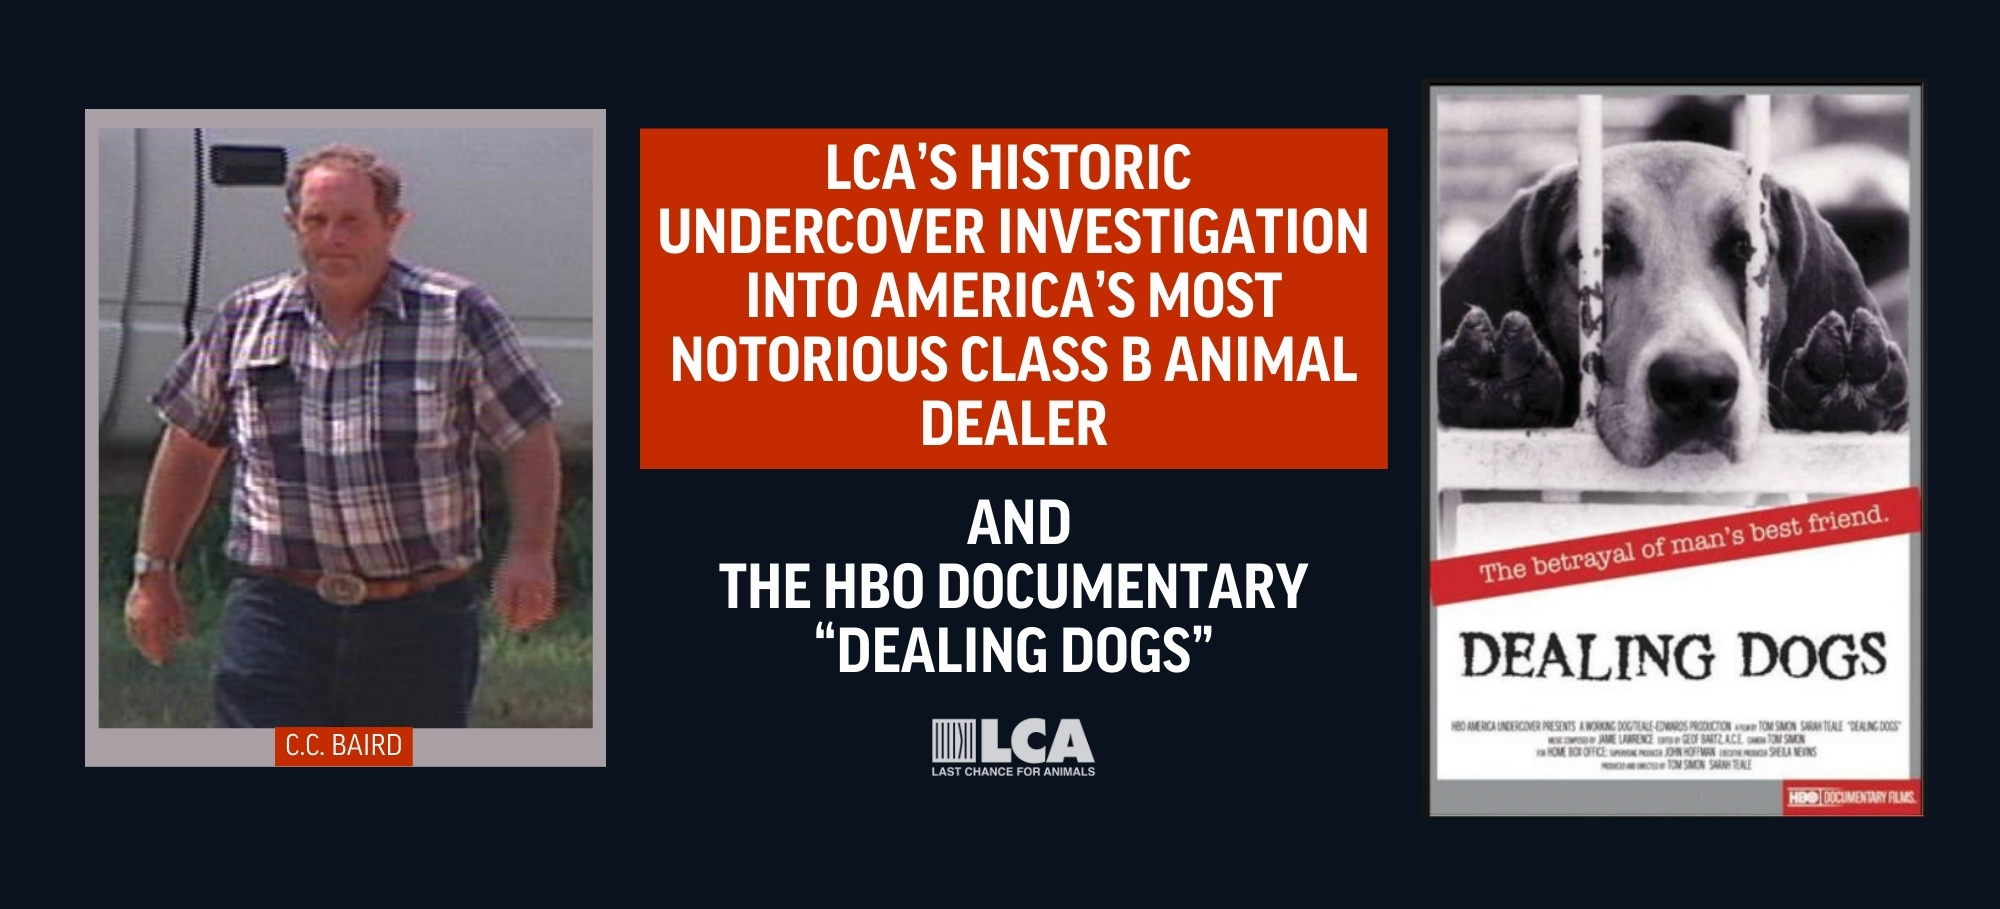 cc baird hbo documentary dealing dogs